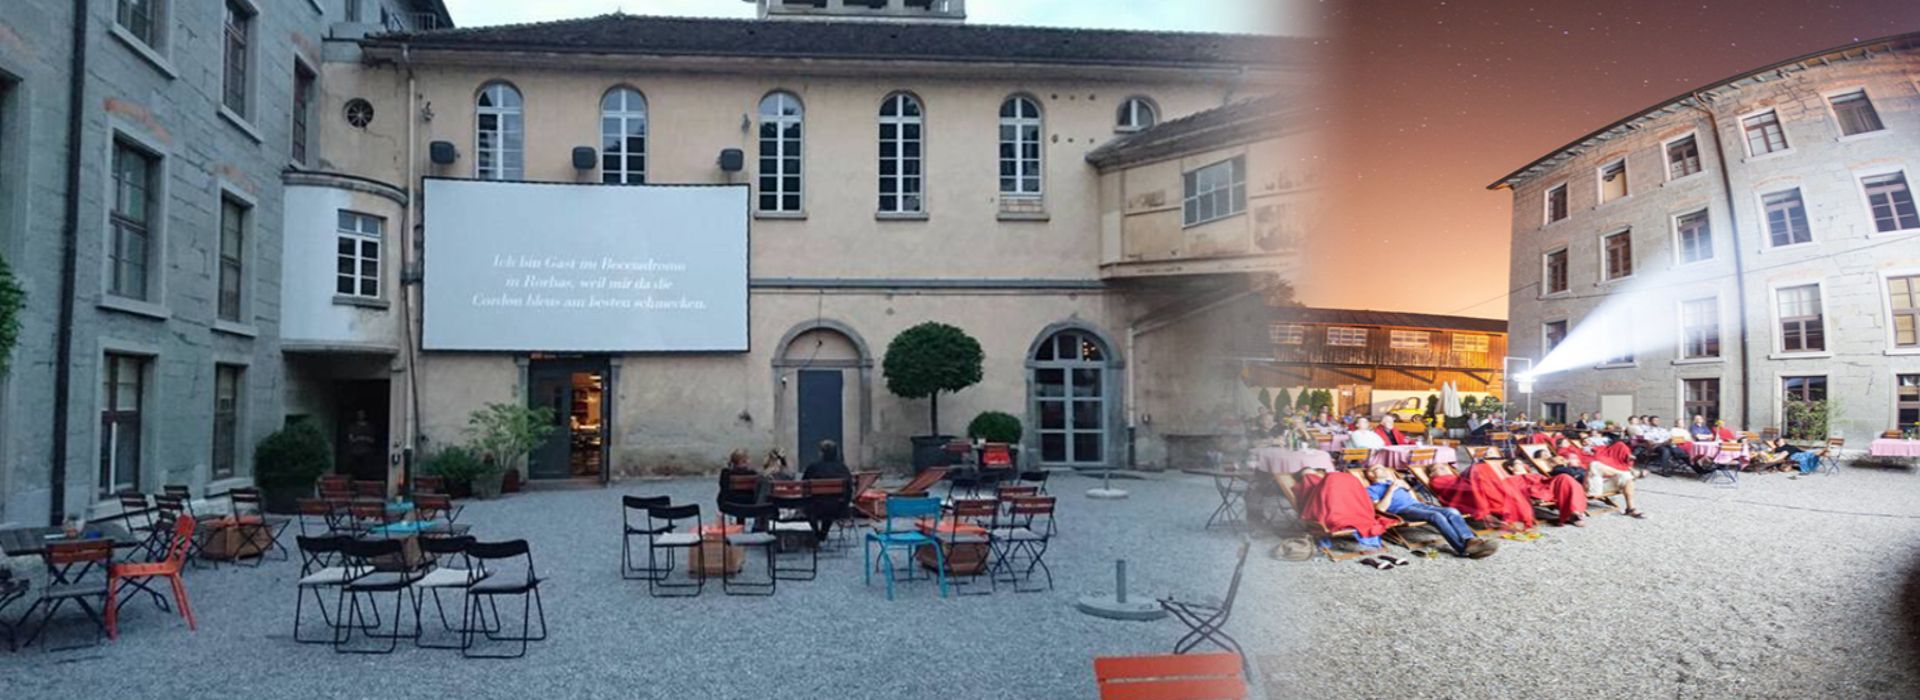 FS Multipurpose Horns Chosen for Outdoor Movie Theater in Switzerland